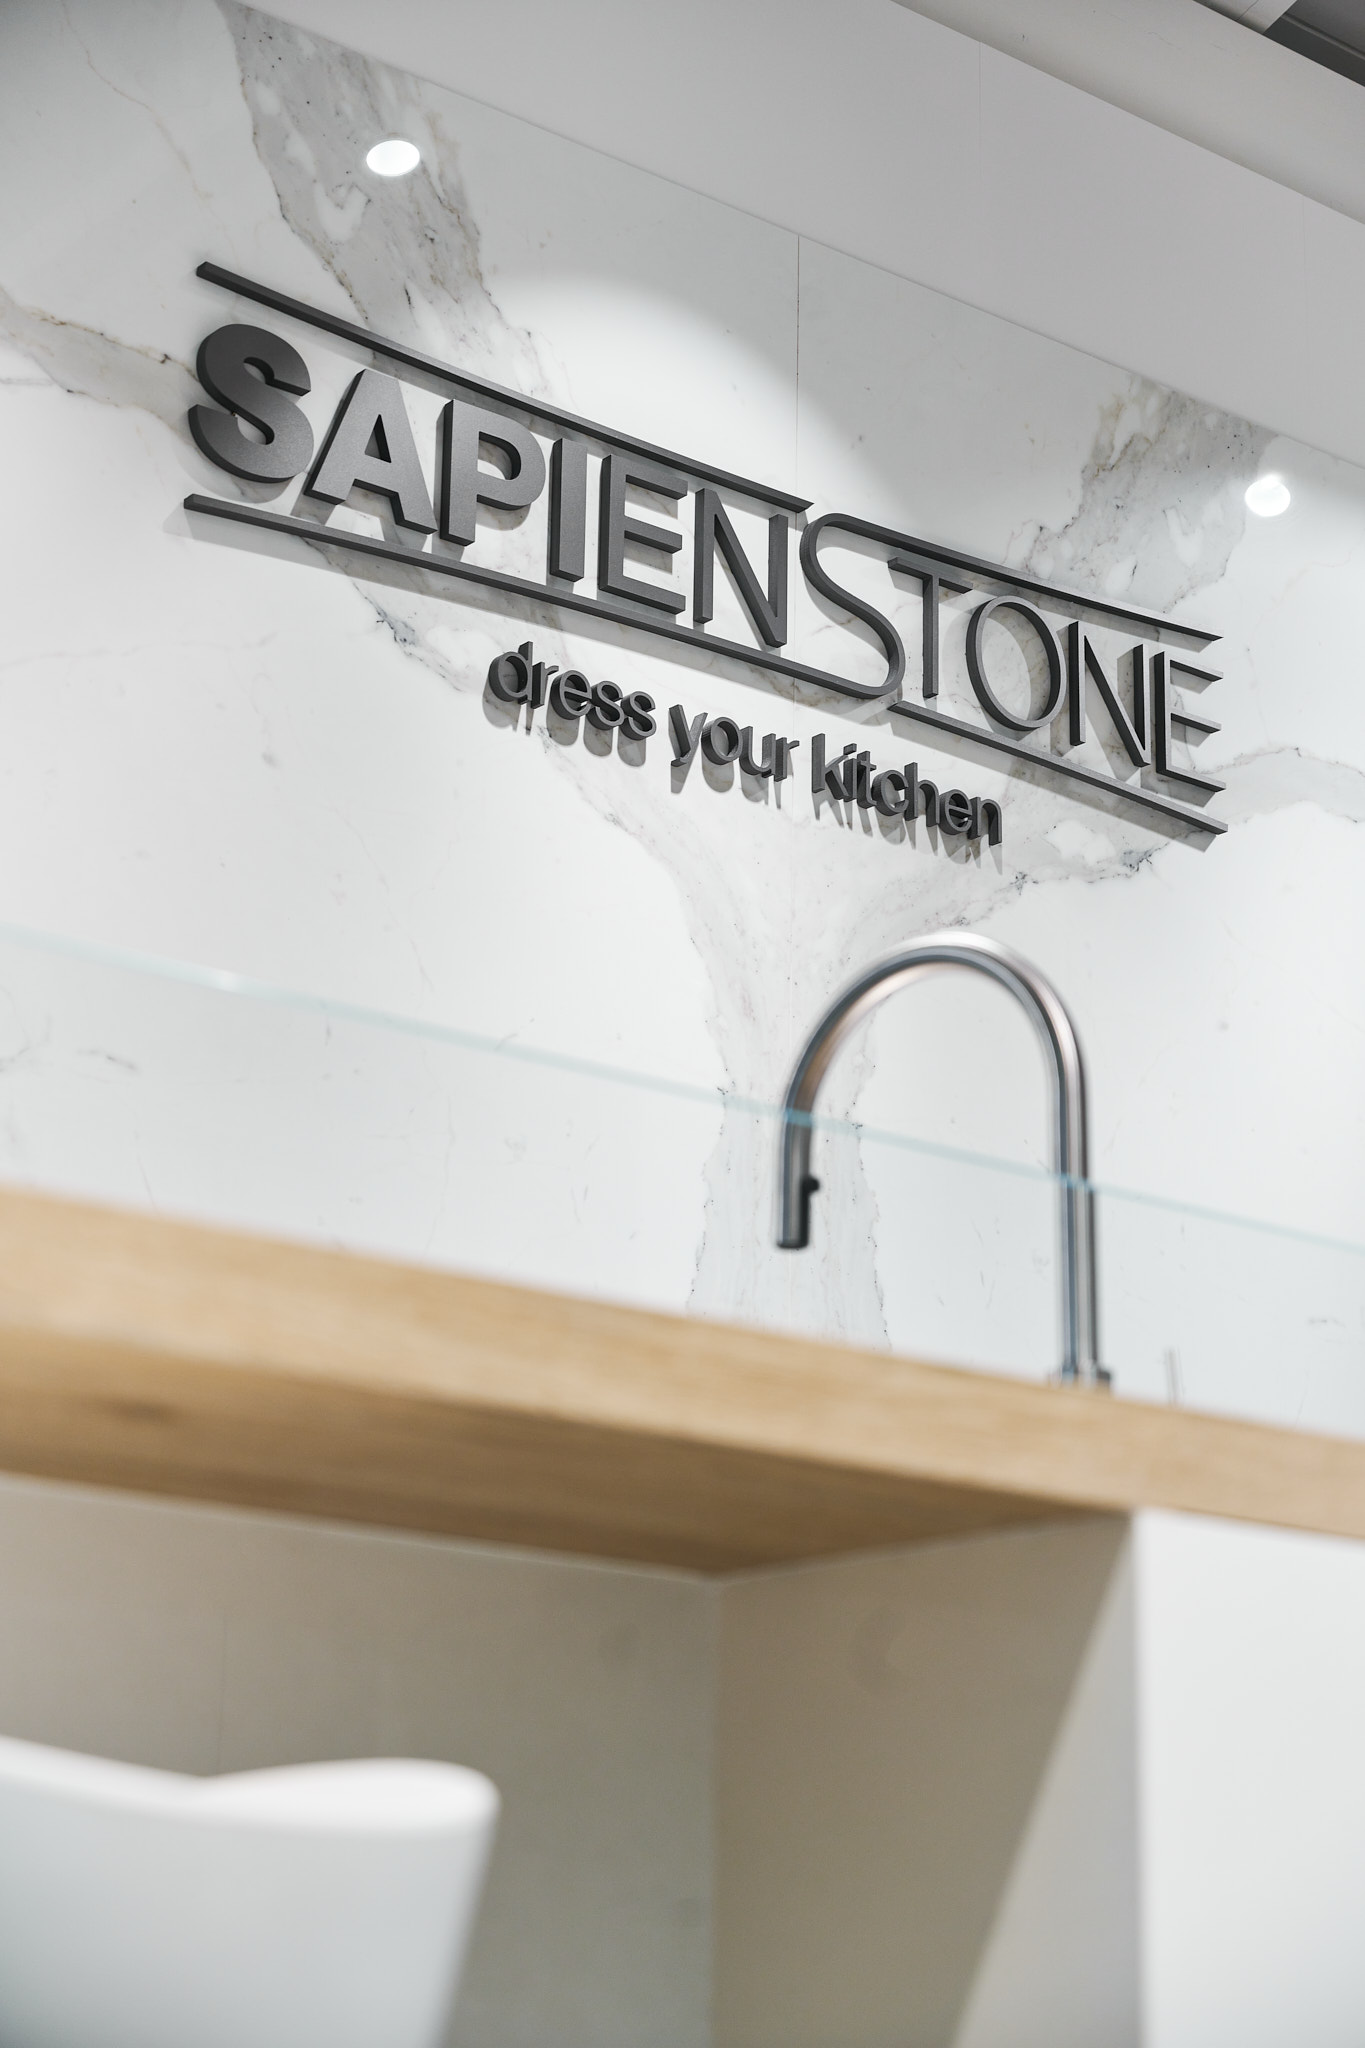 SapienStone renouvelle son showroom de Castellarano